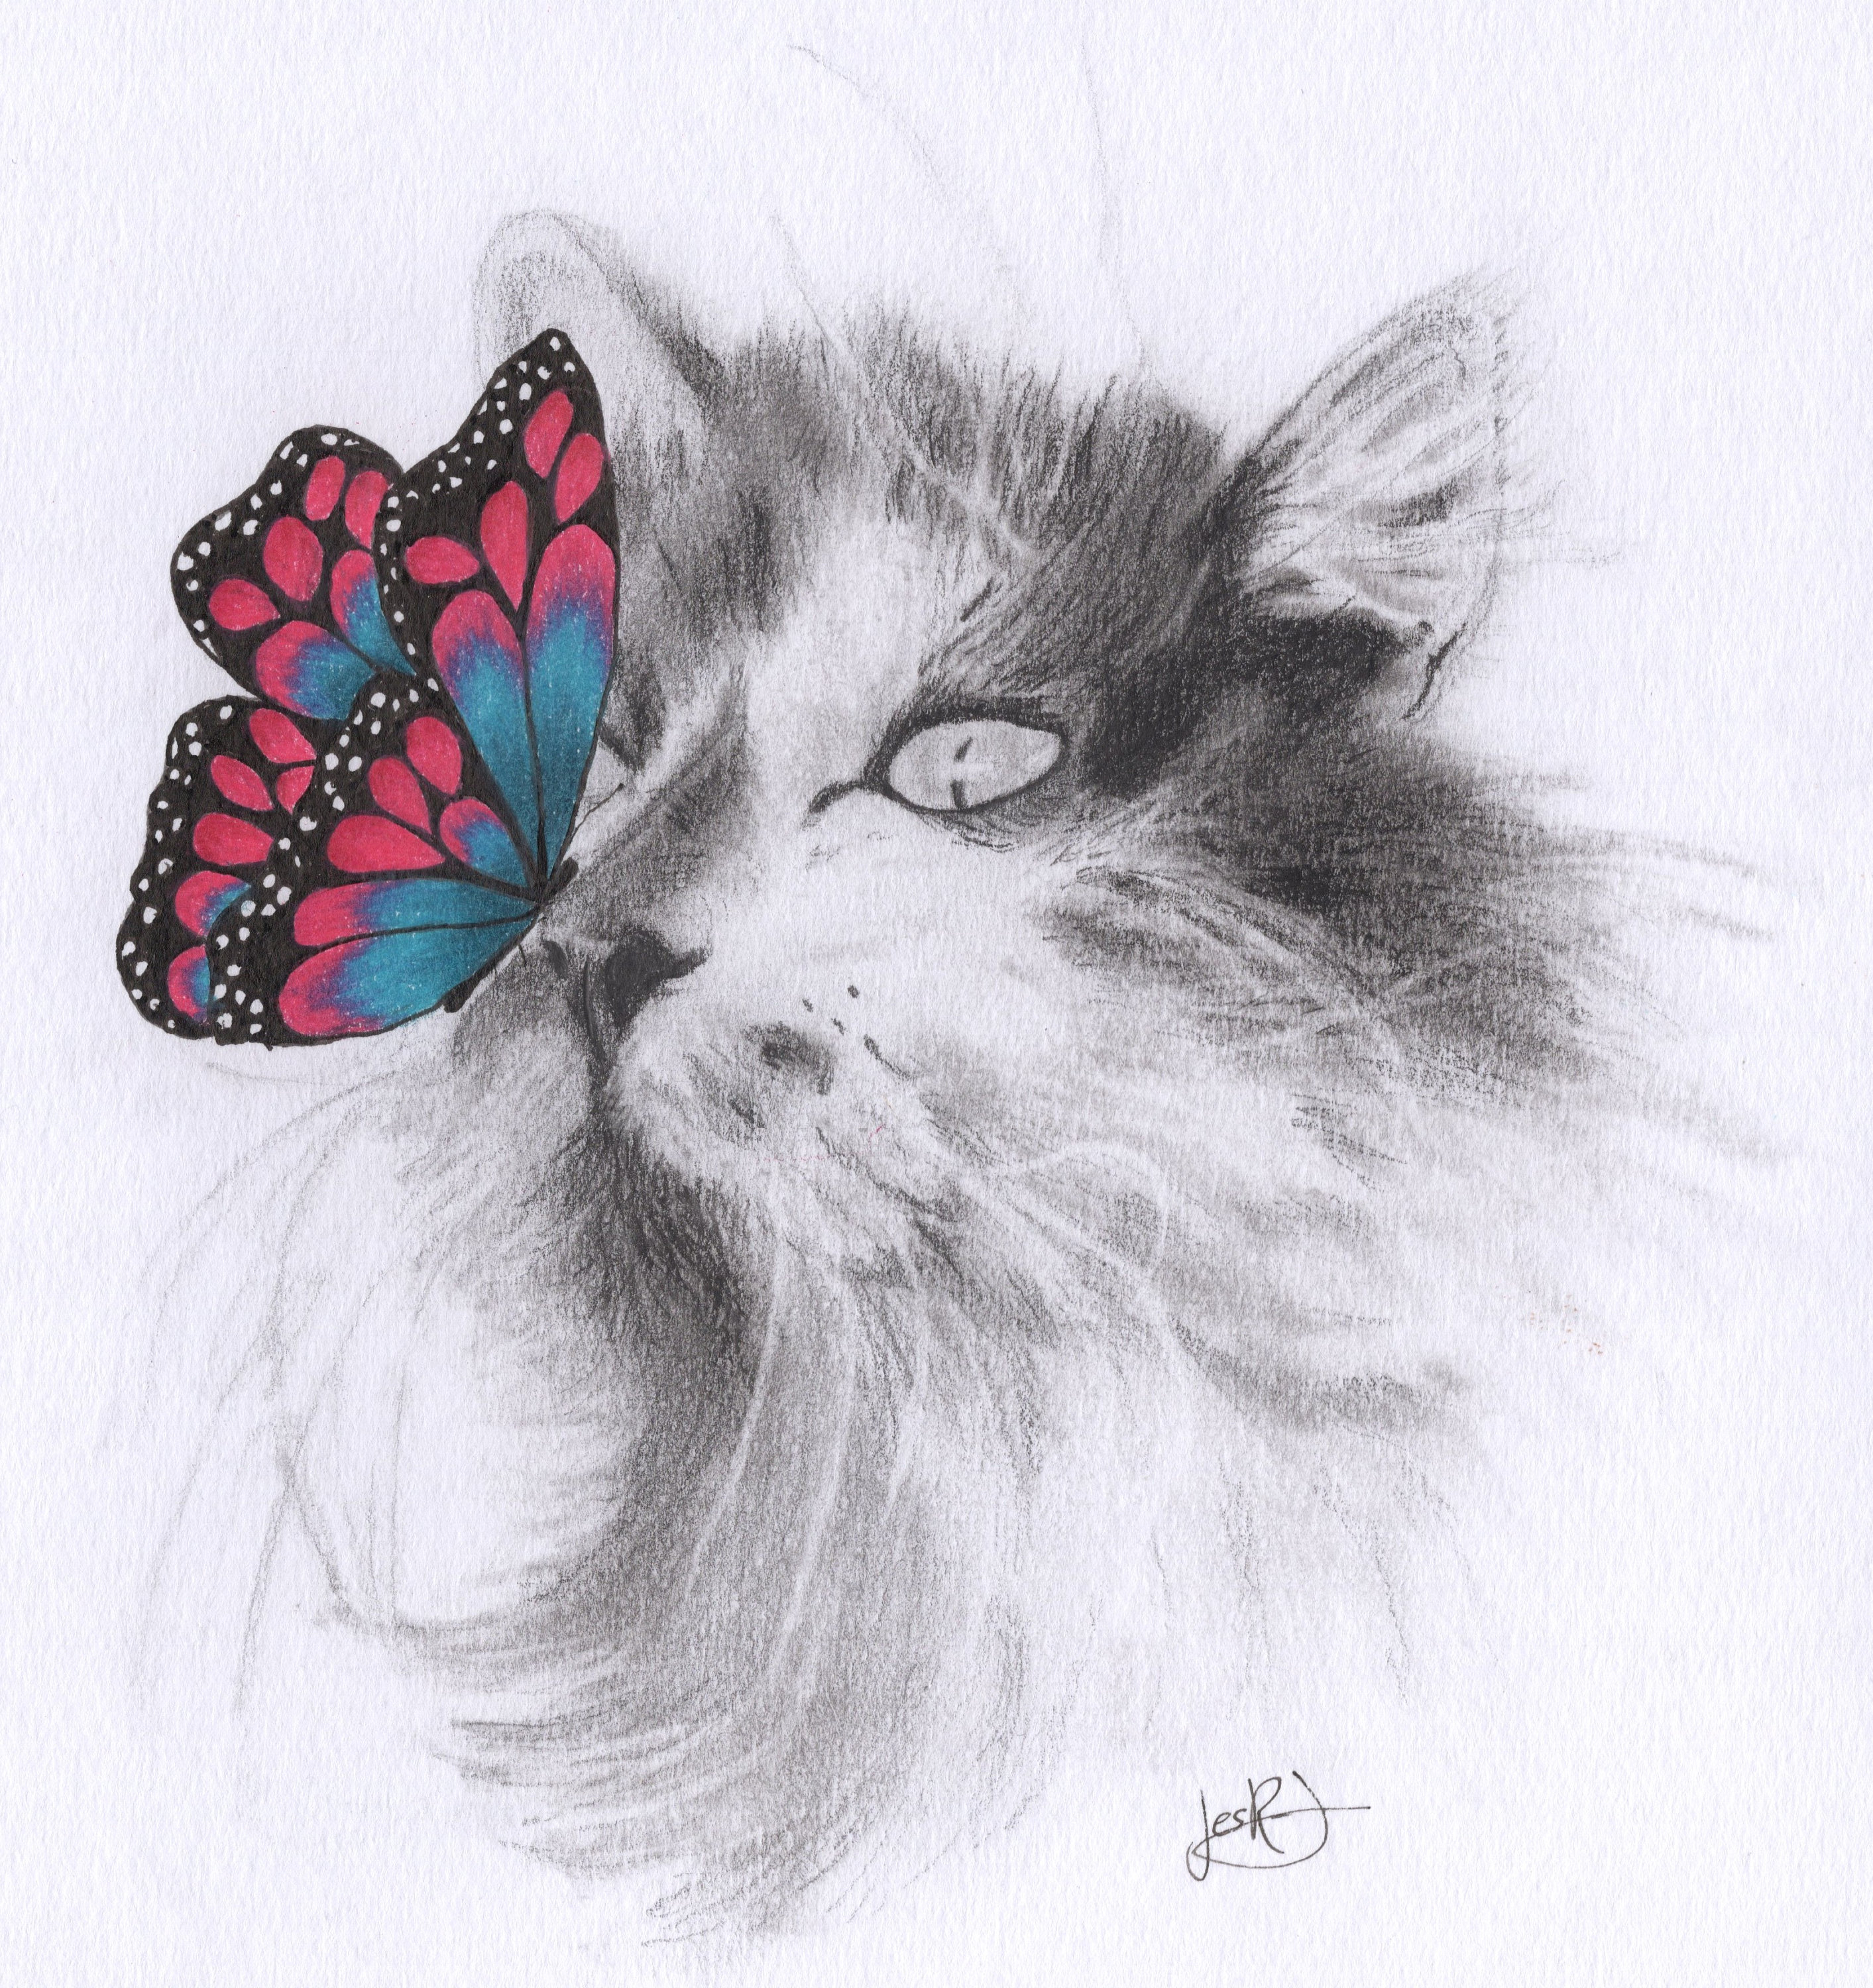 Desenho realista - O gato e a borboleta! The cat and the butterfly